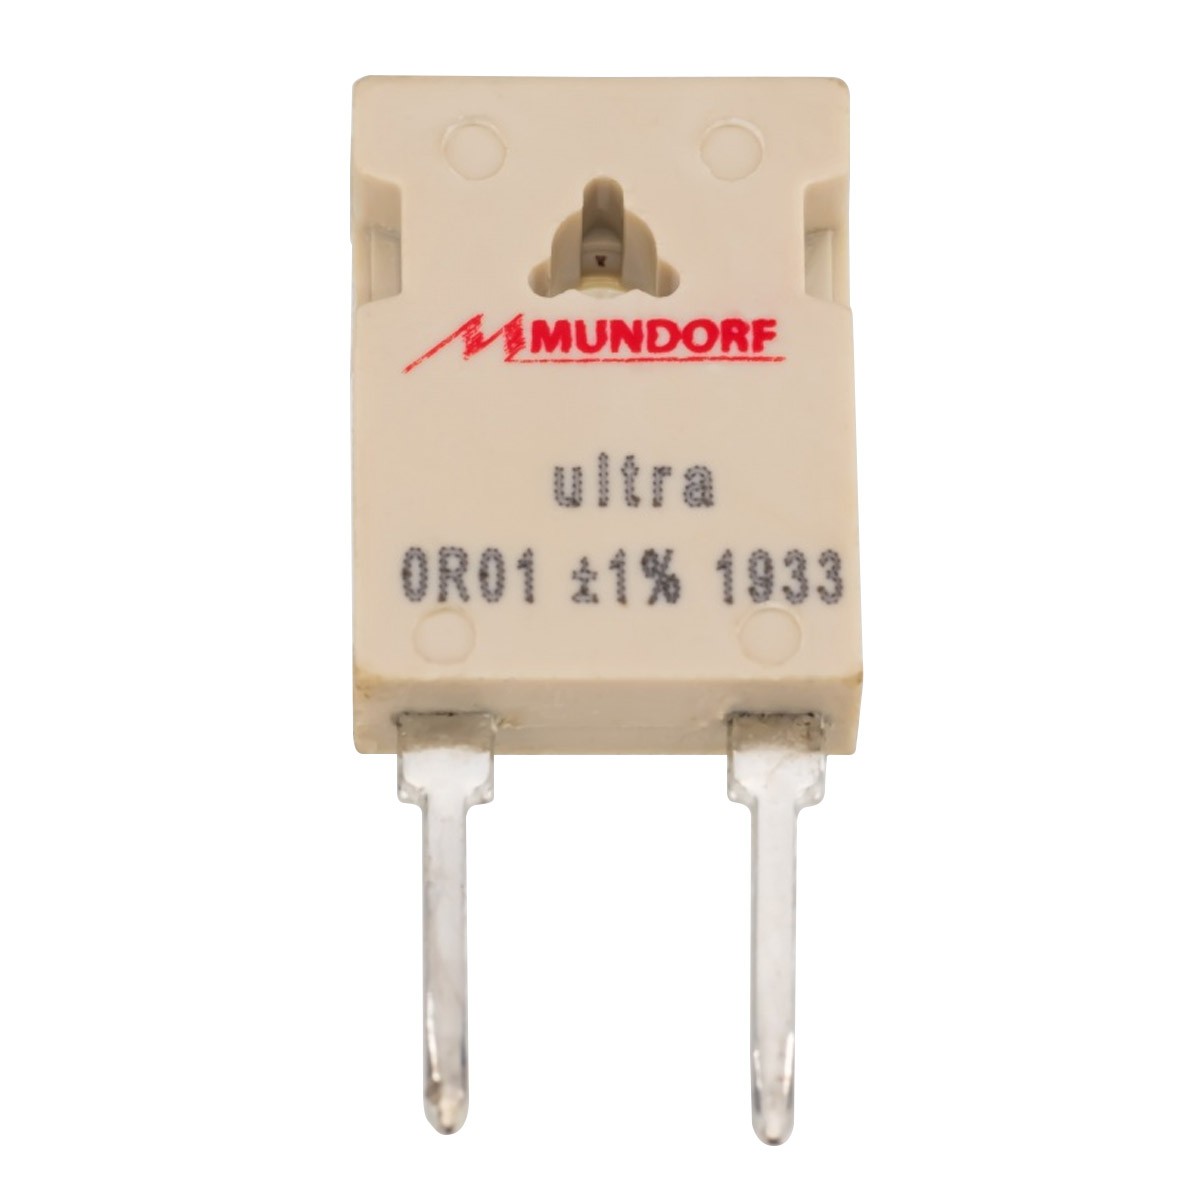 MUNDORF MRESIST ULTRA Resistor 30W 2.7 Ohm